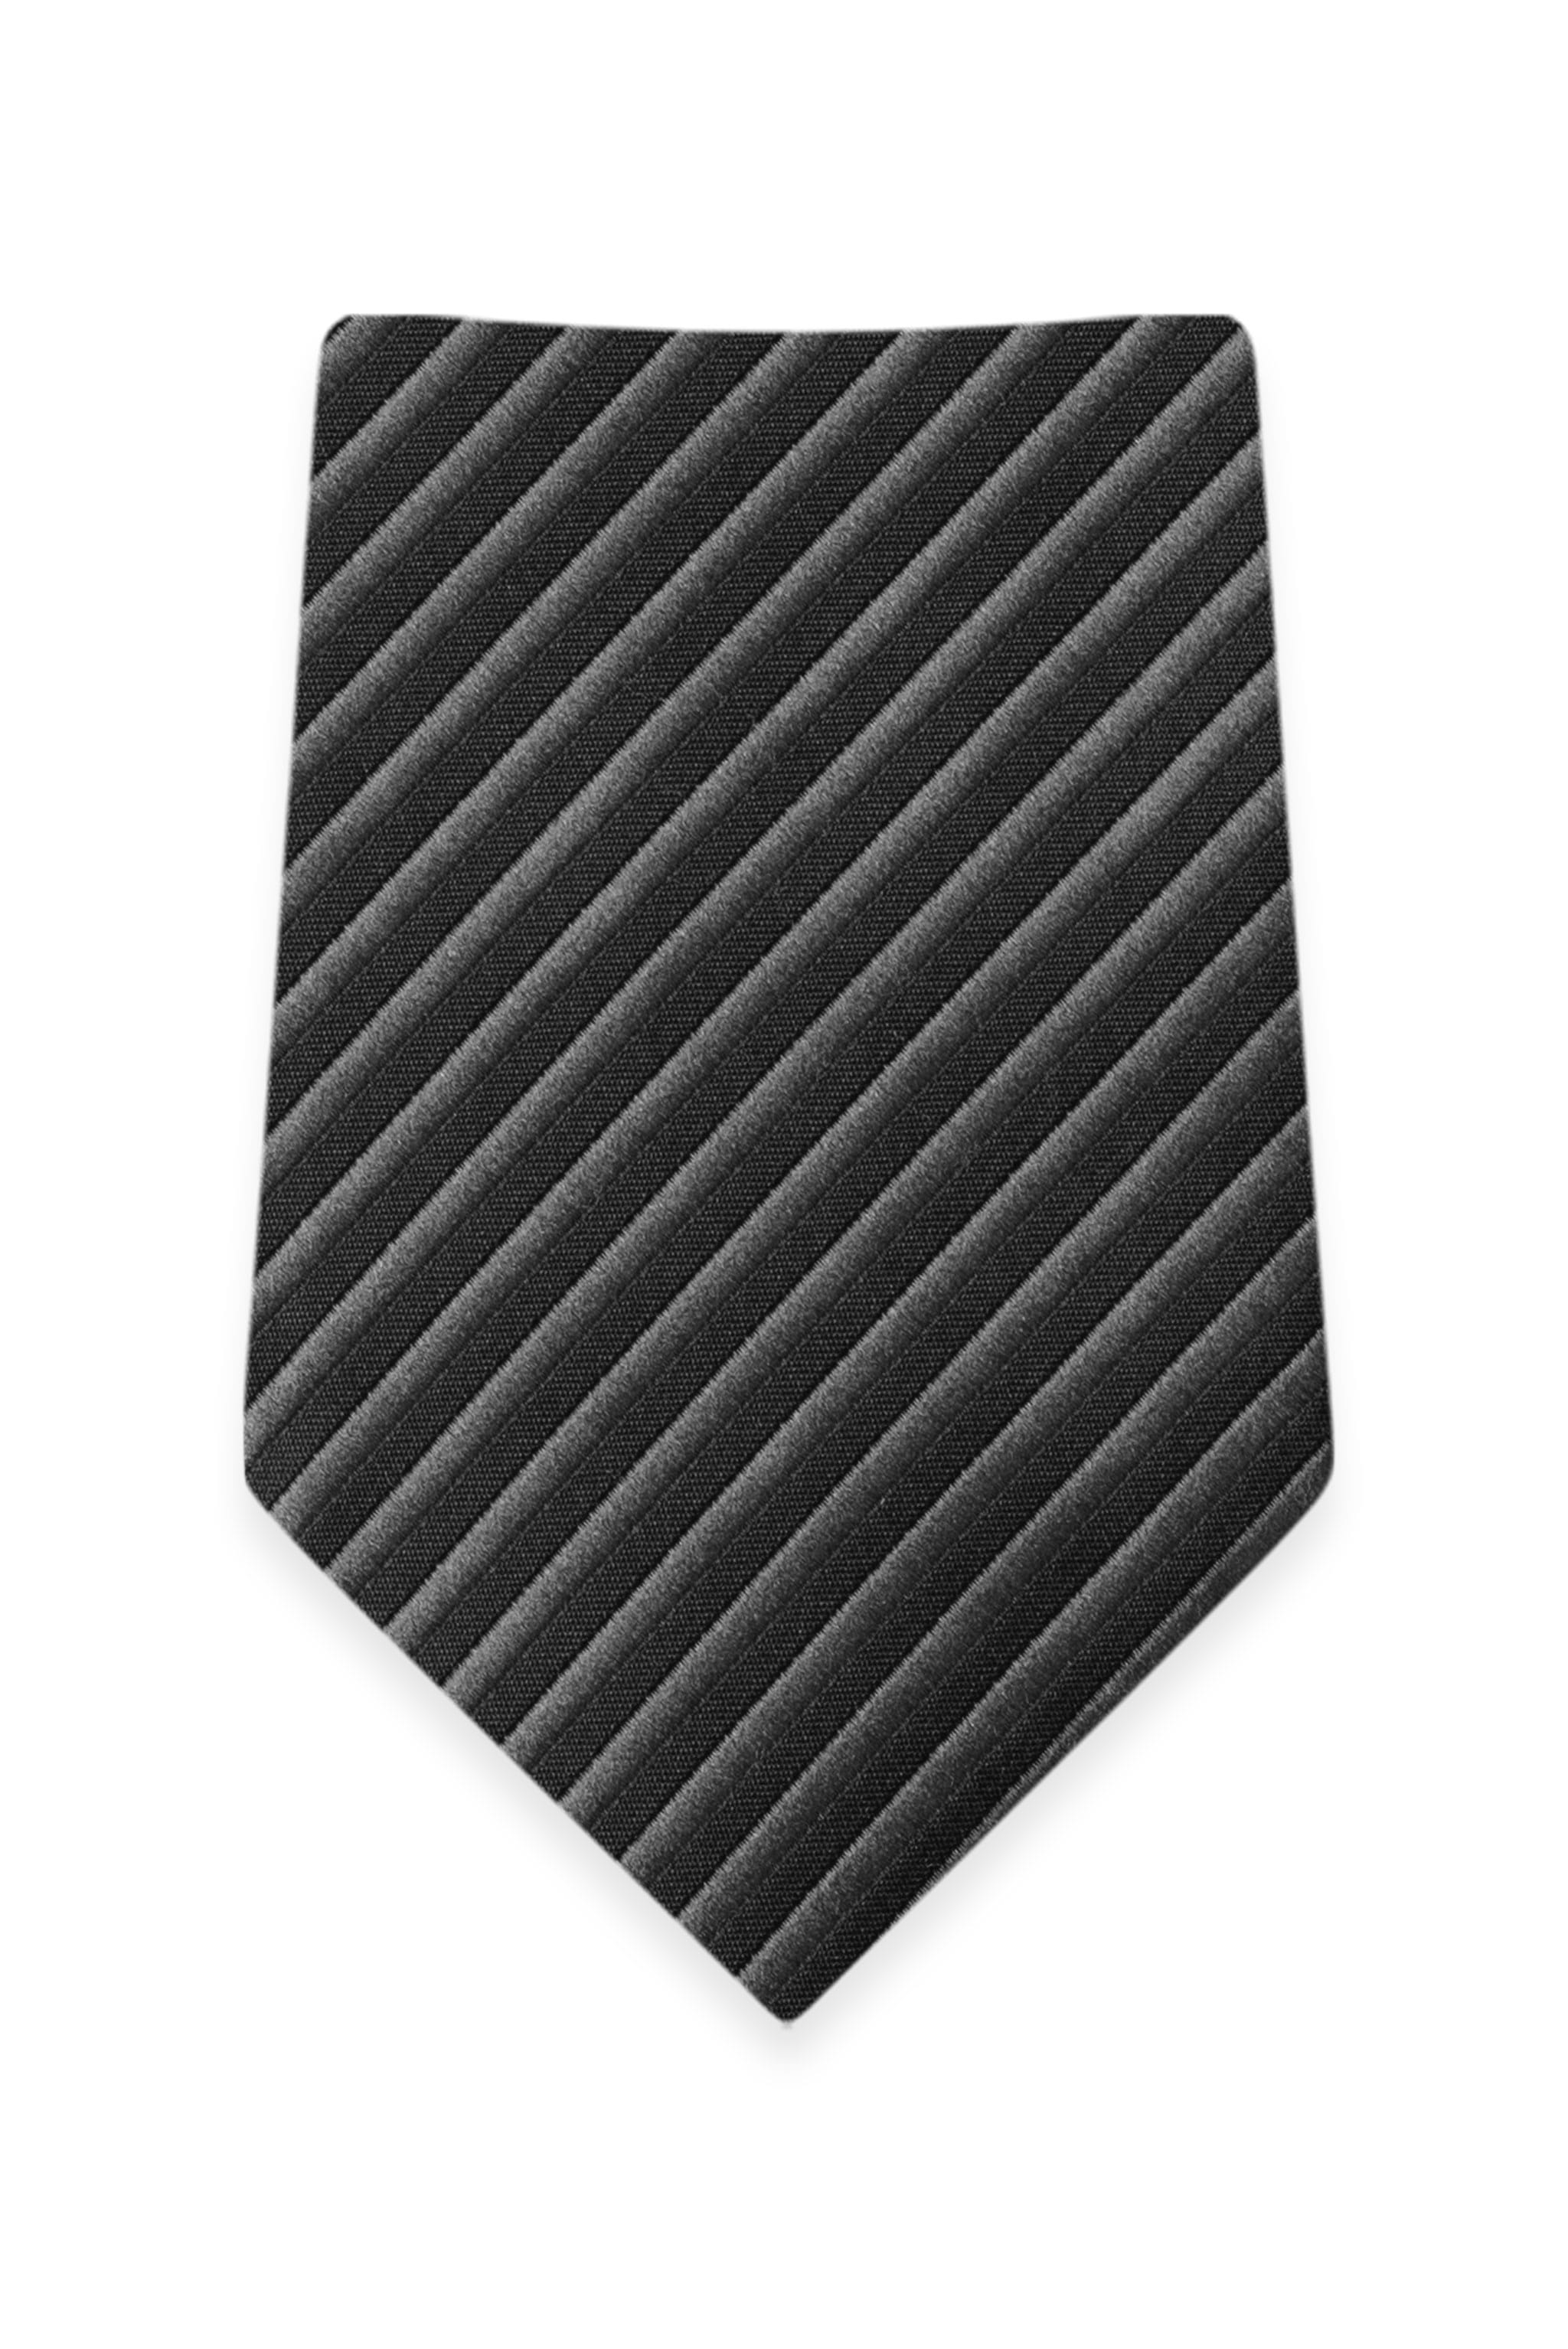 Striped Charcoal Self-Tie Windsor Tie